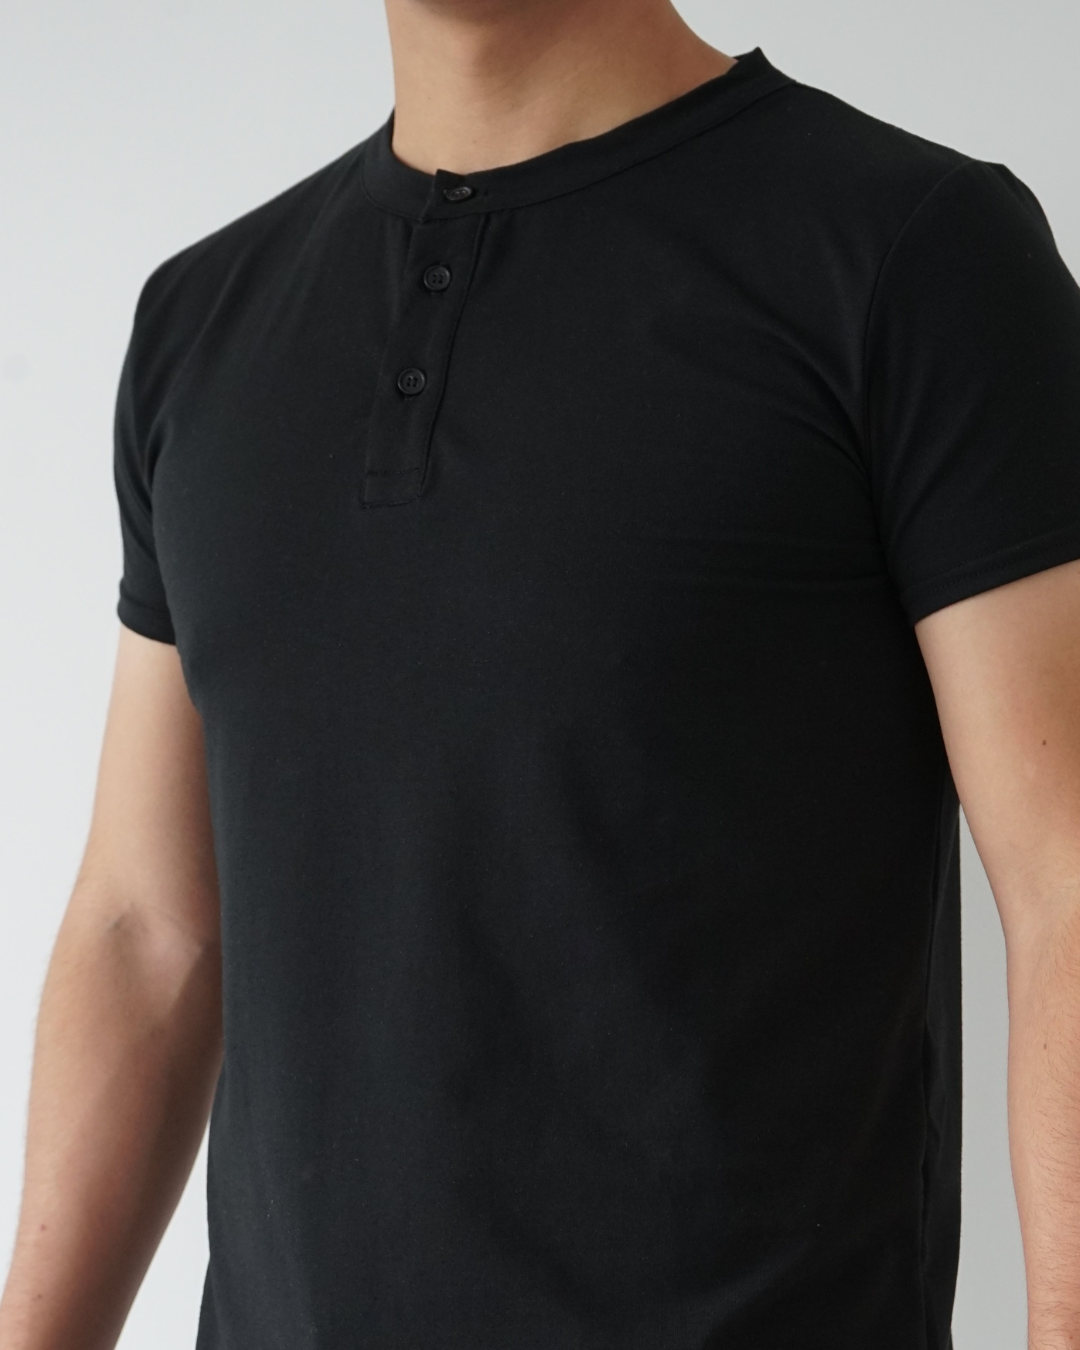 Black T-shirt - Short Sleeve Henley Neck Curved Bottom